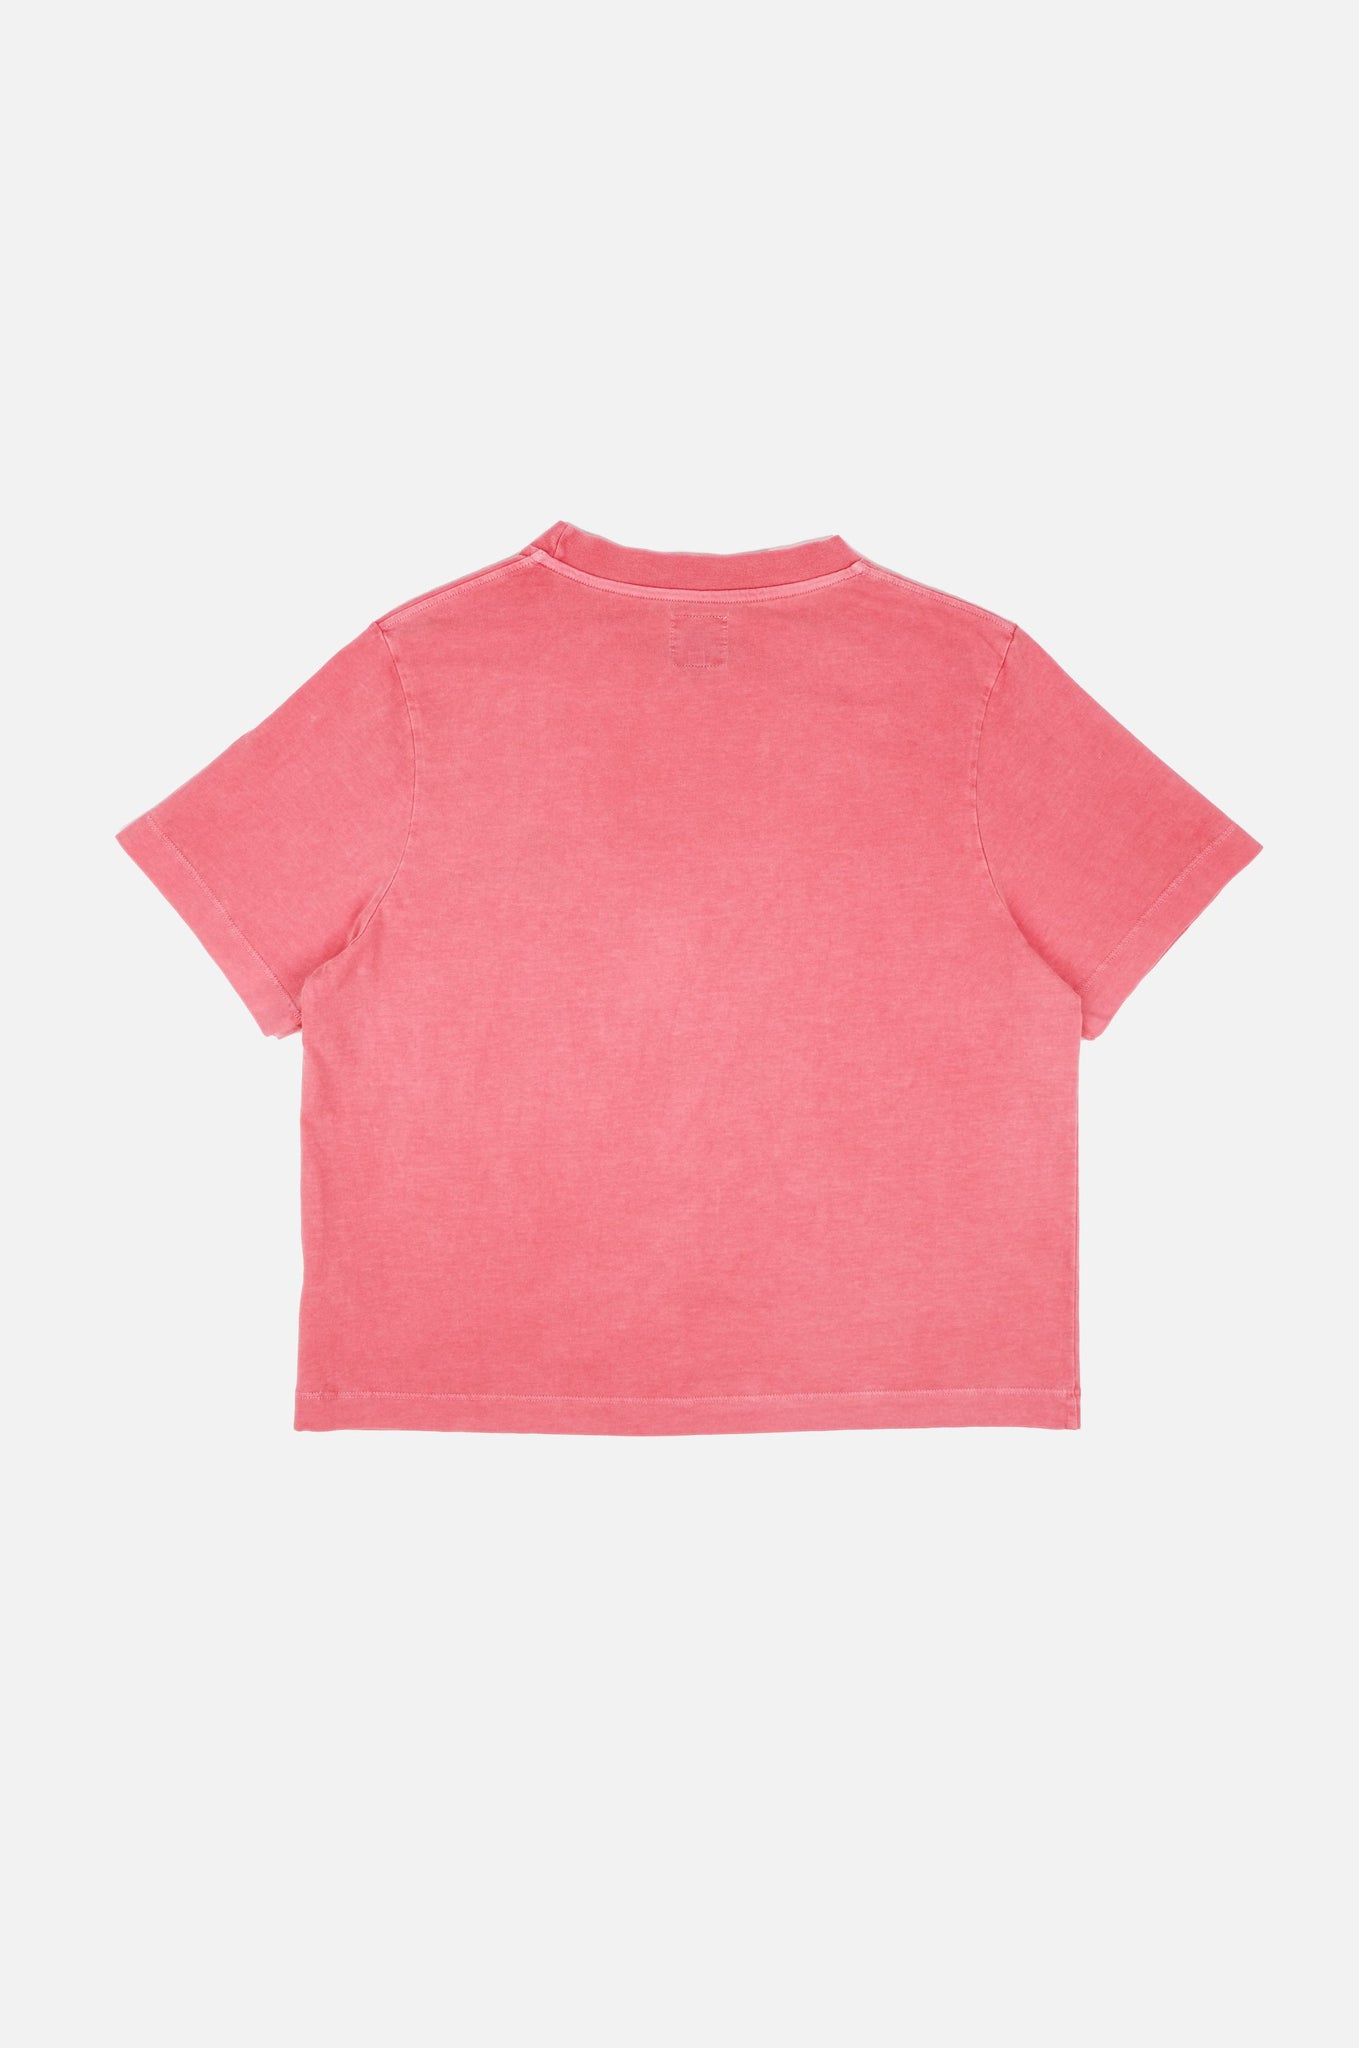 Camiseta Mujer Gorgos Pink Blossom